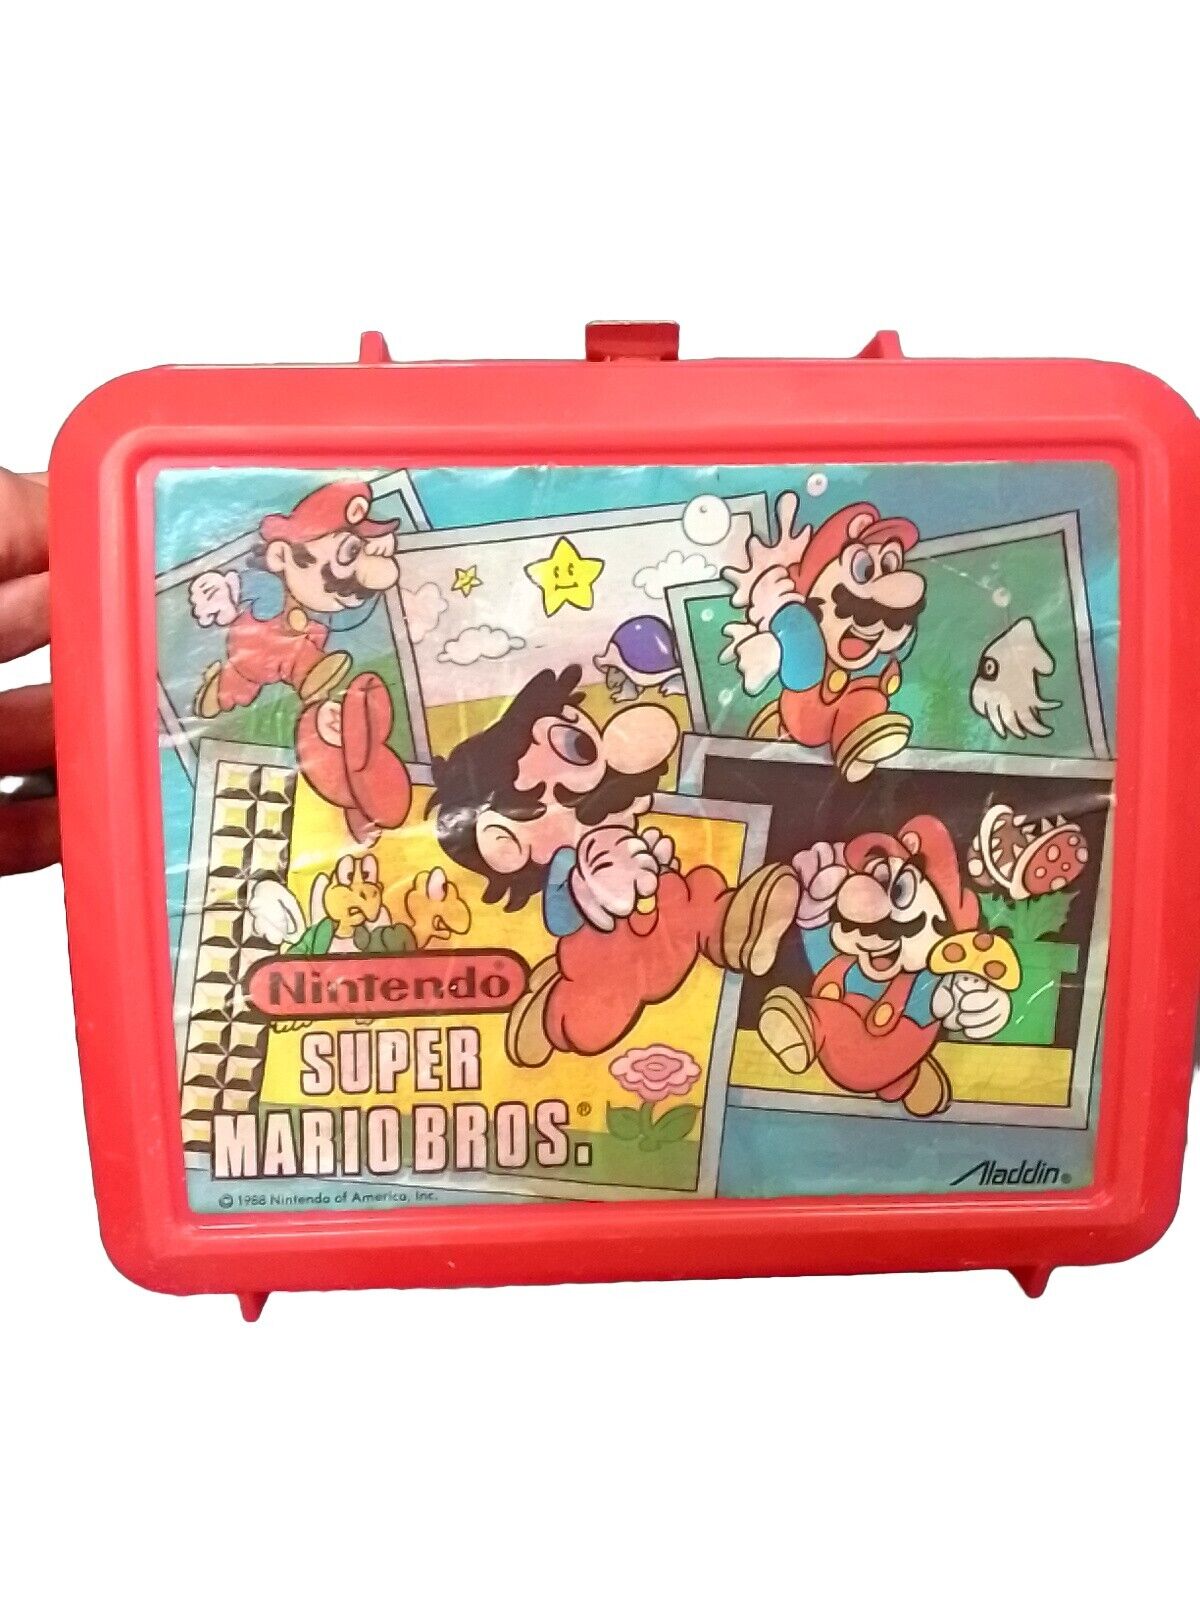 SALVAGE Restored Vintage 1988 Super Nintendo Super Mario Bros Aladdin Lunch Box